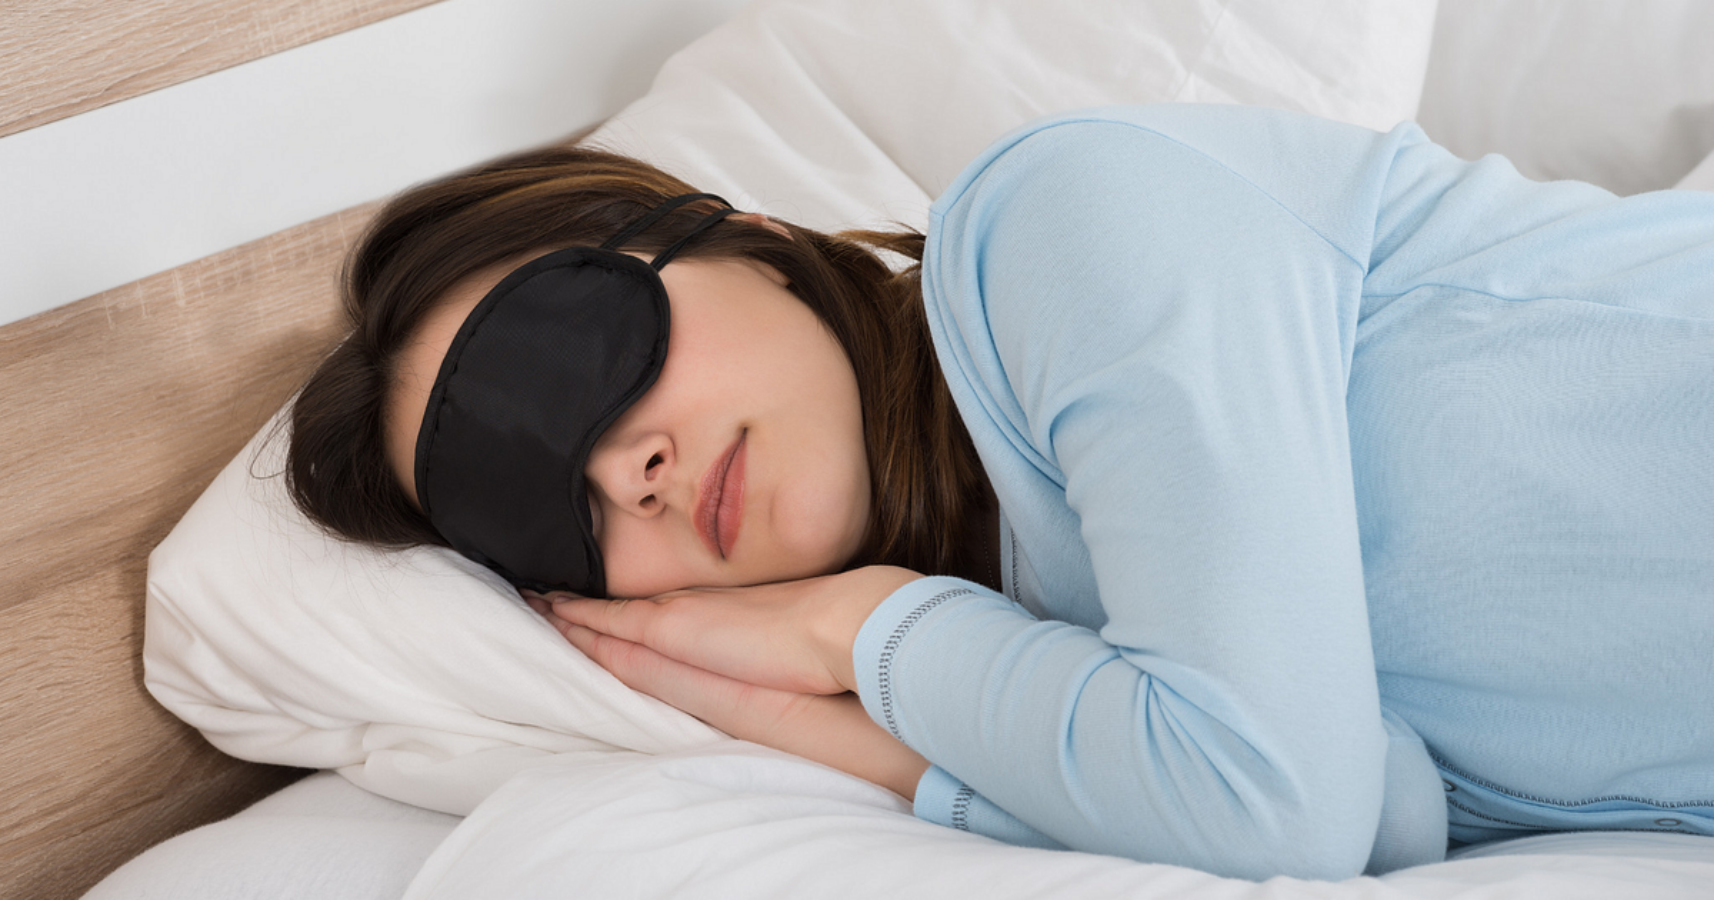 A Woman Sleeping With A Black Eye Mask